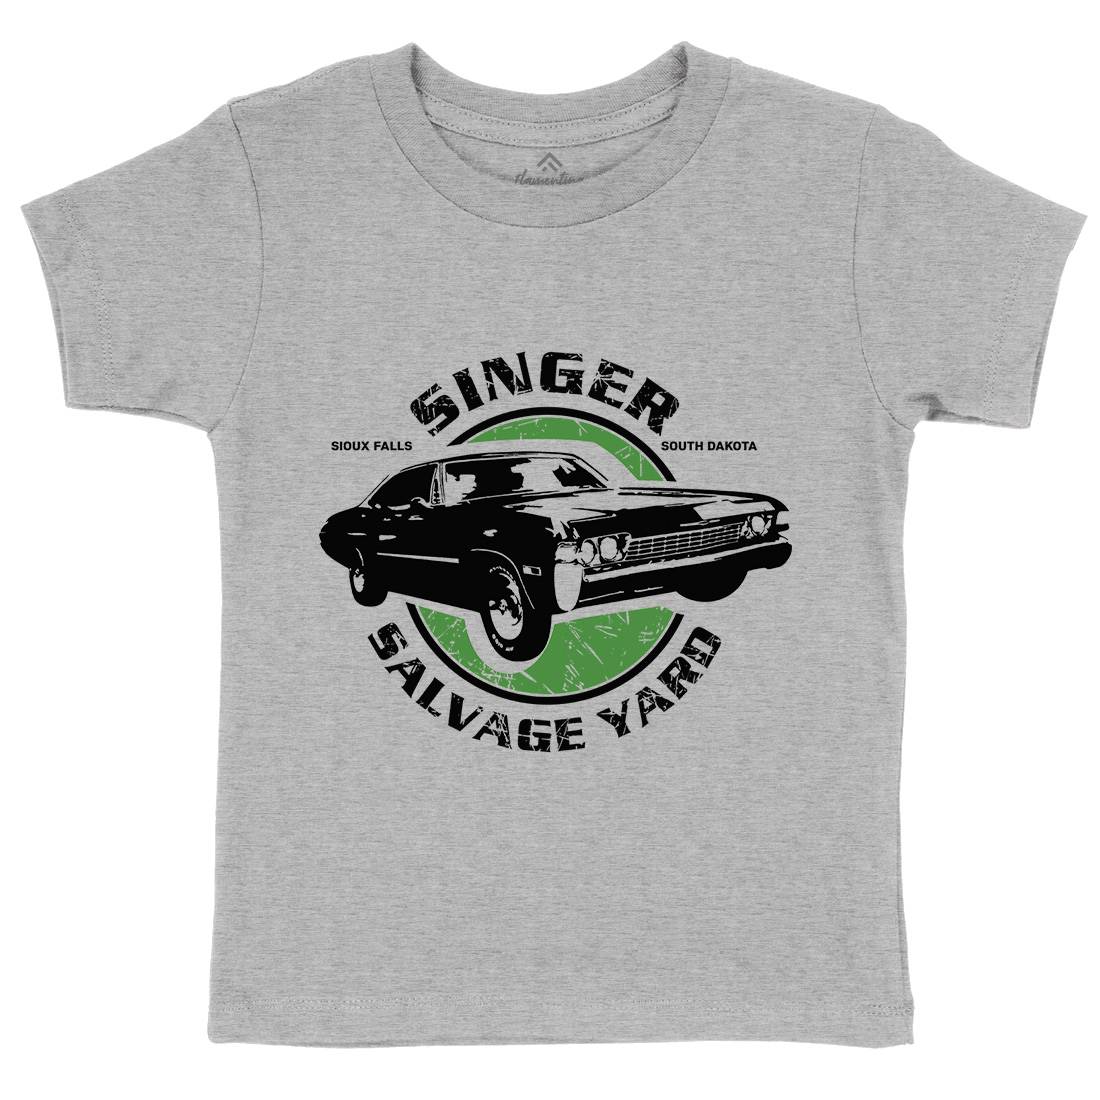 Singer Salvage Yard Kids Crew Neck T-Shirt Cars D377